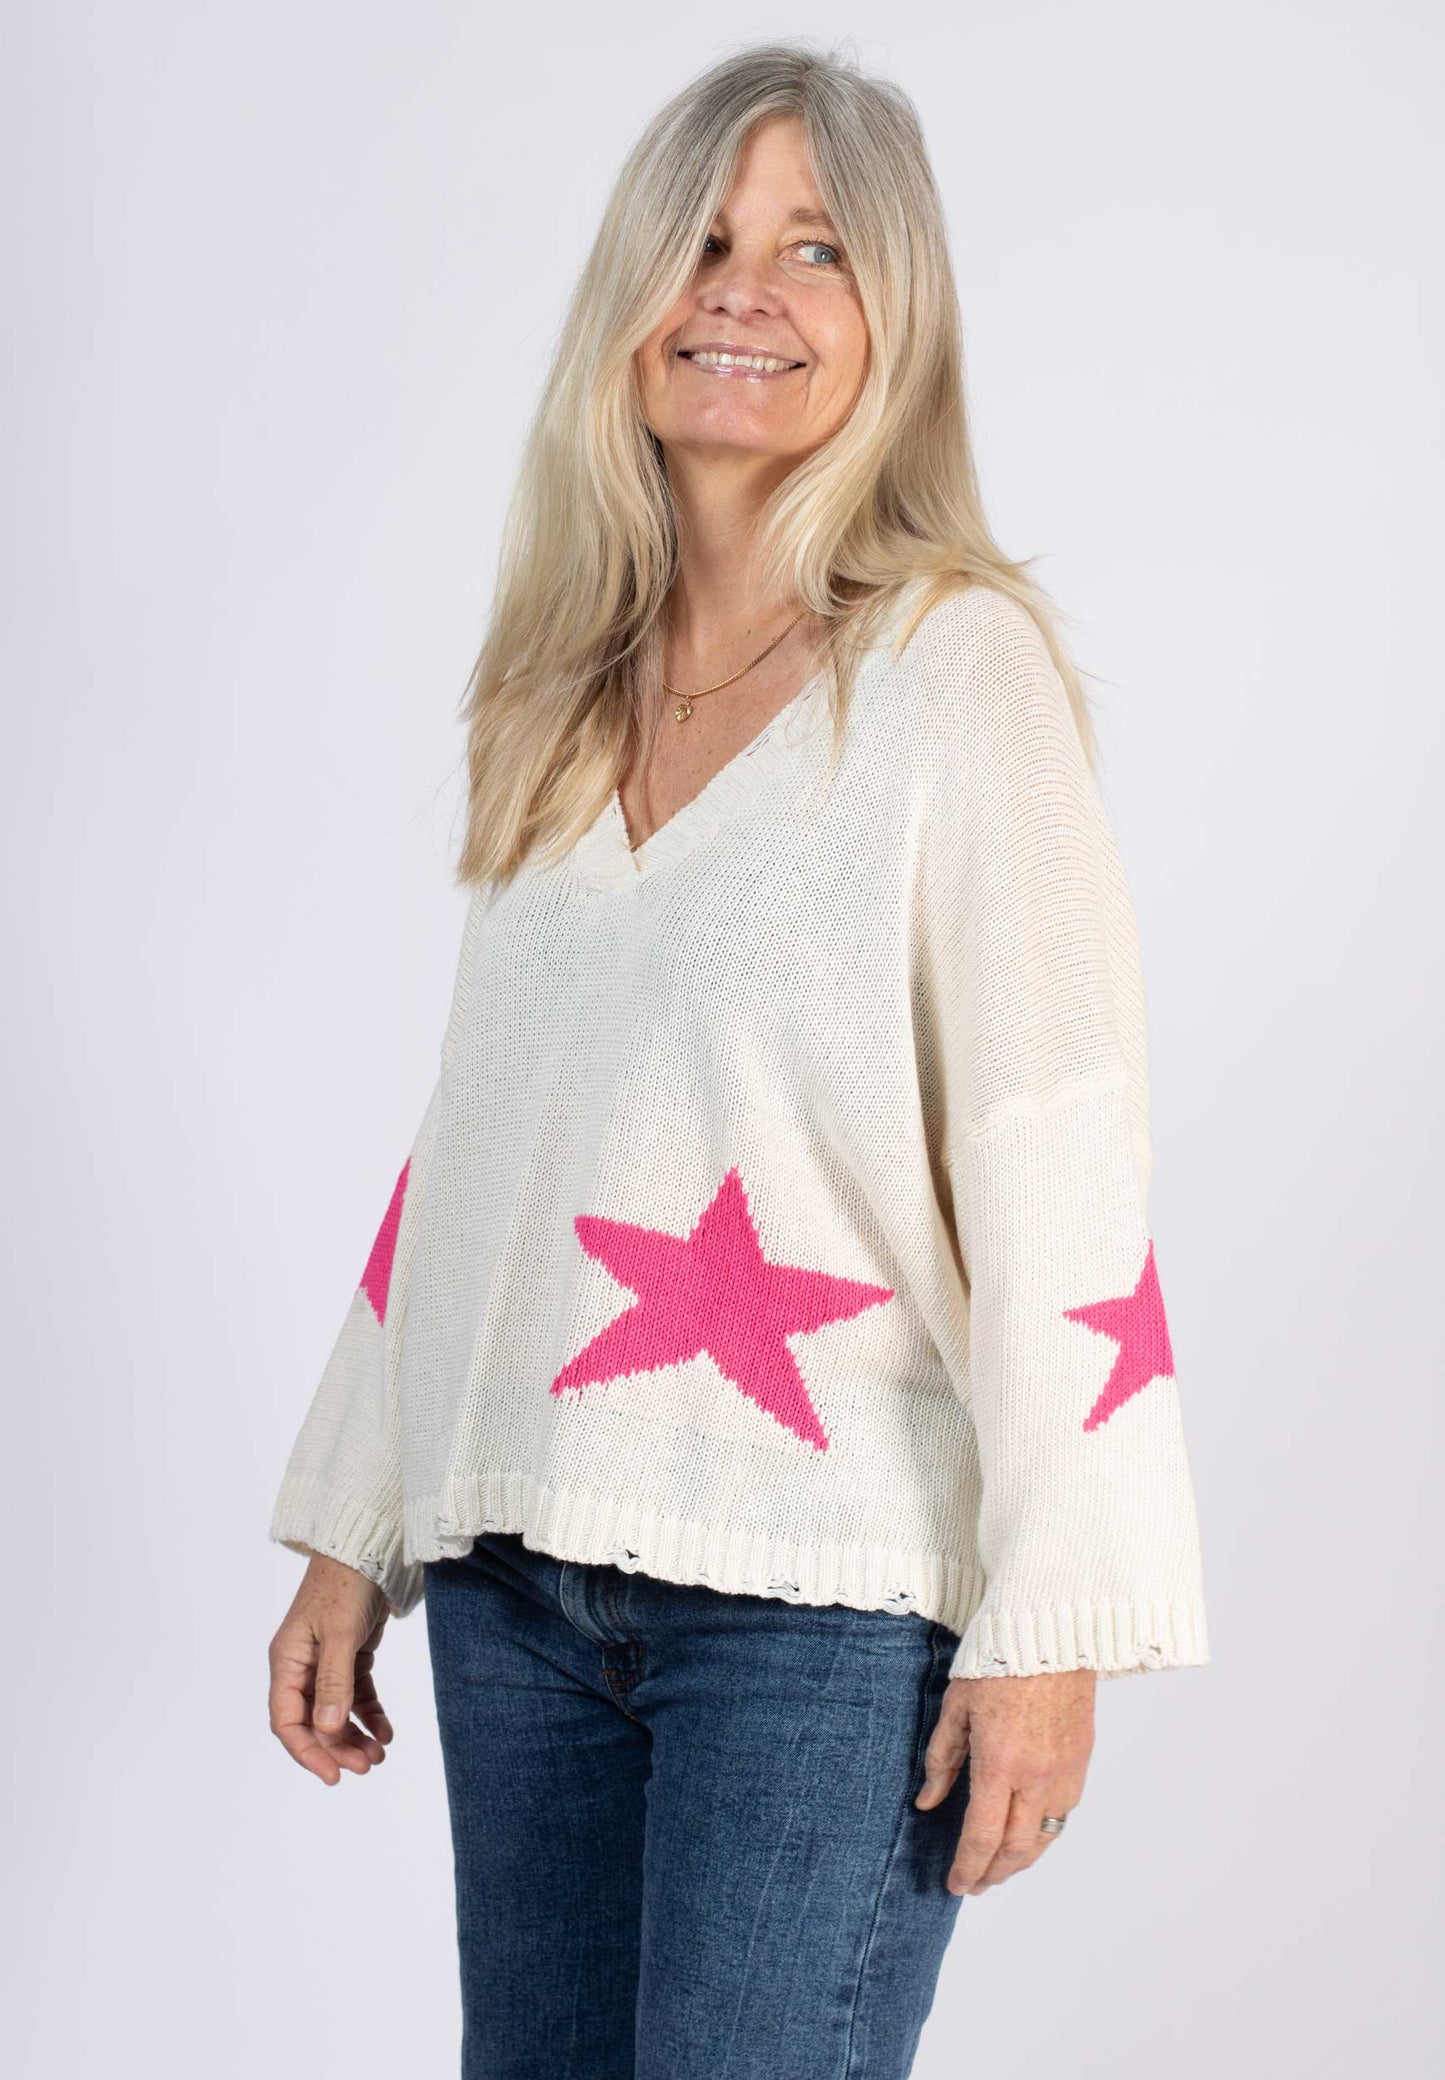 Stank Stockholm - Stickad tröja med stjärnor Offwhite